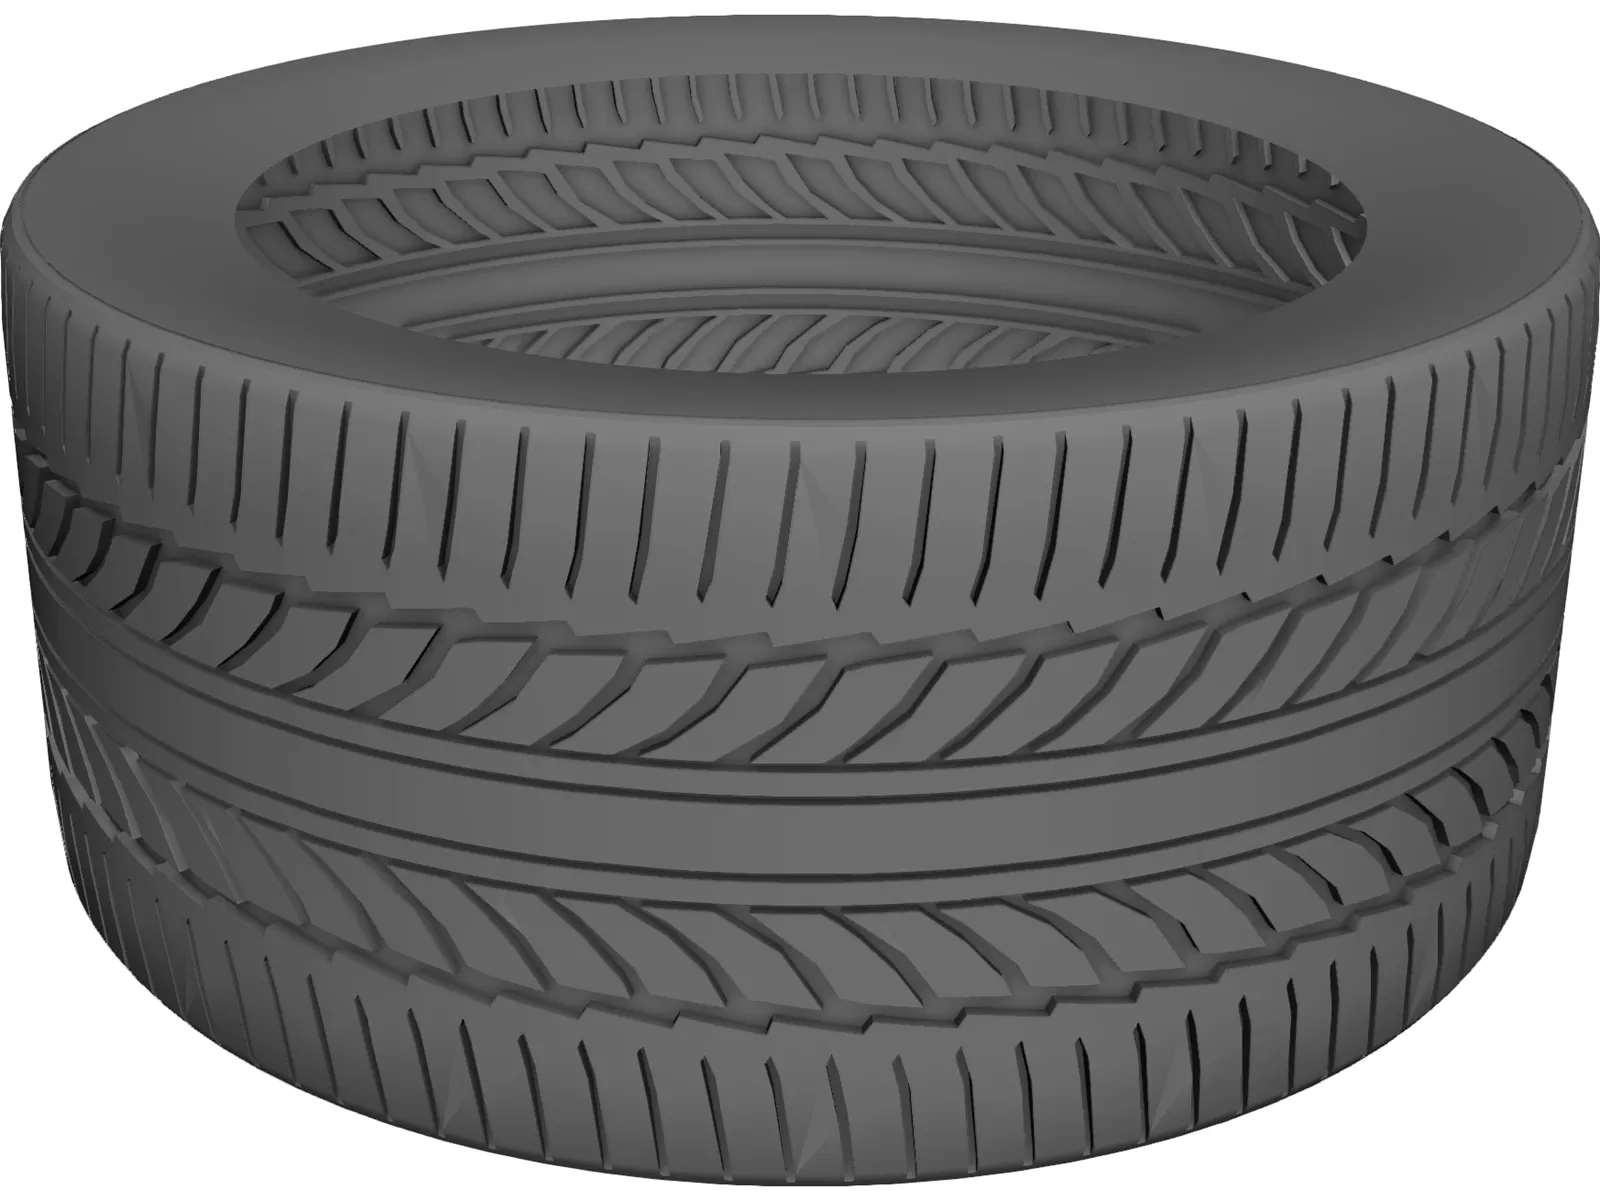 Tire Bridgestone Potenza 3D Model